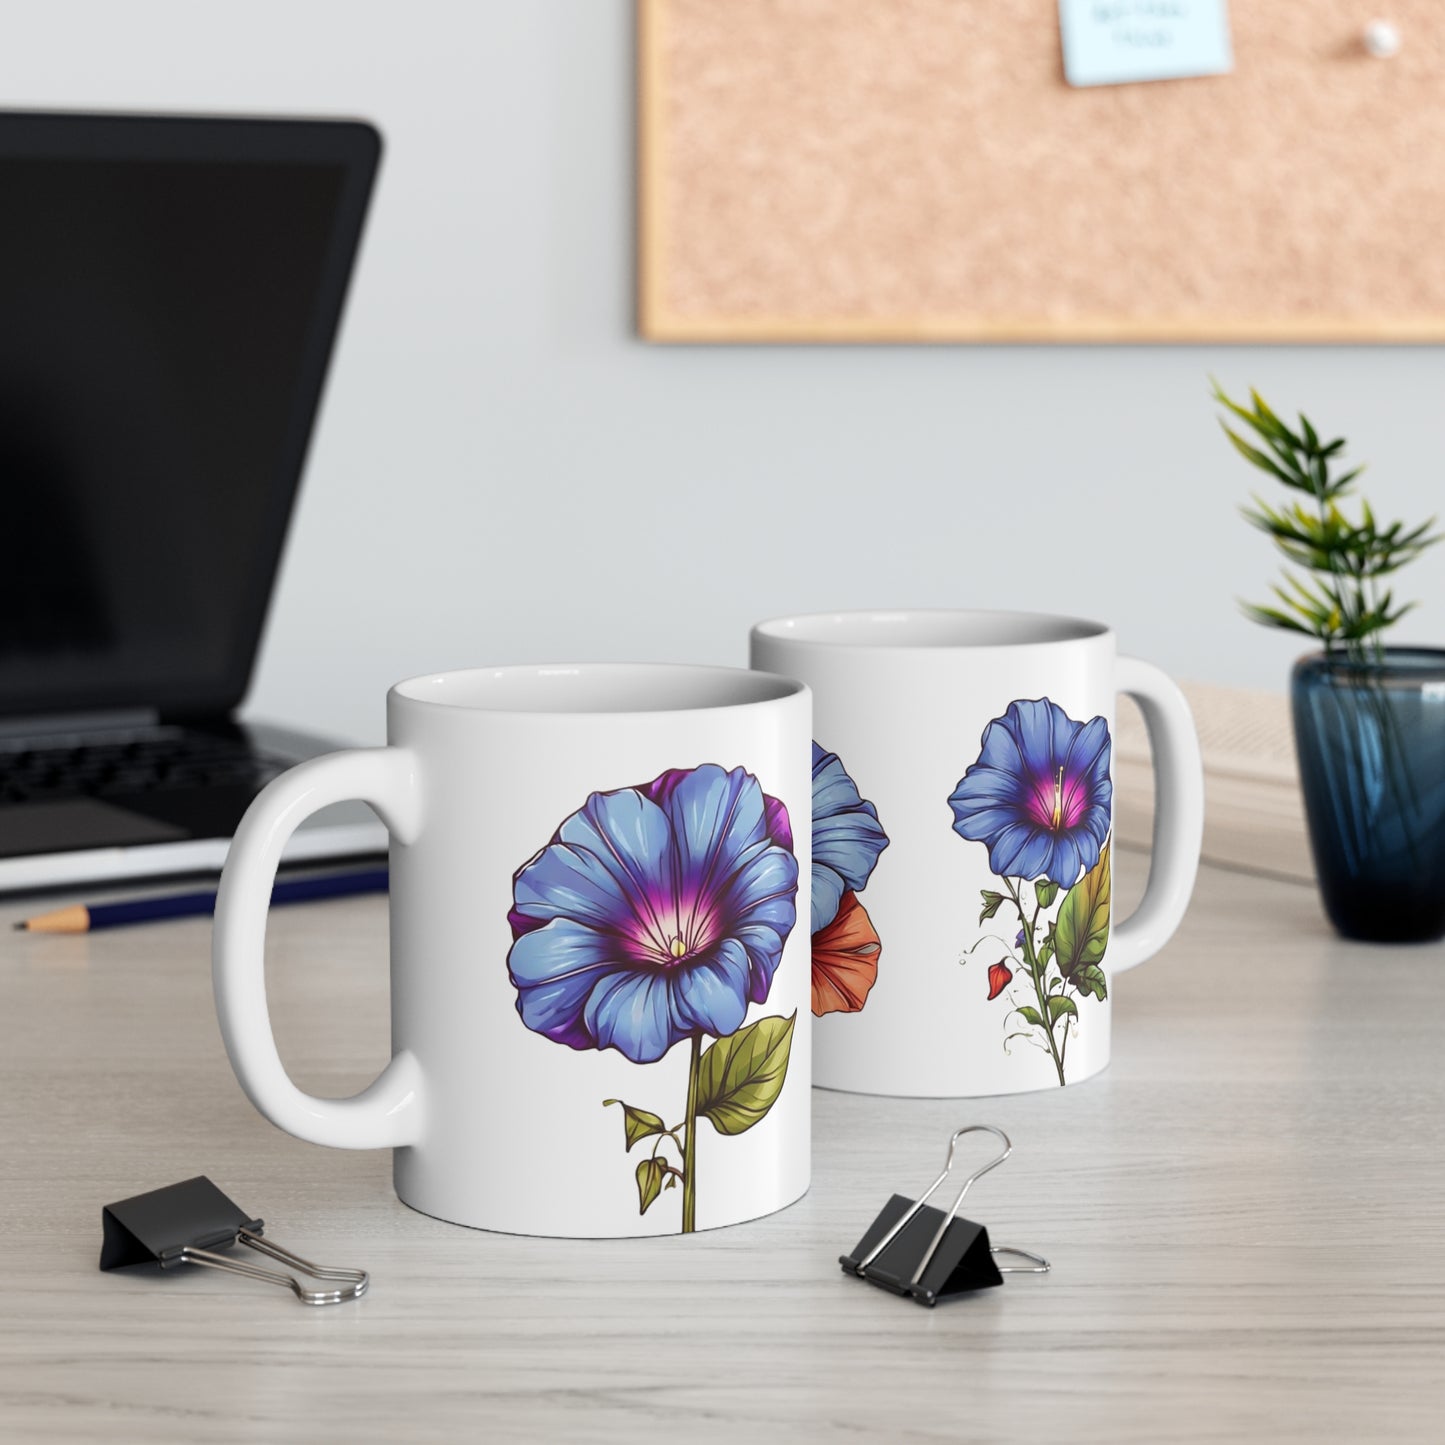 Morning Glory Flower Mug - Ceramic Coffee Mug 11oz